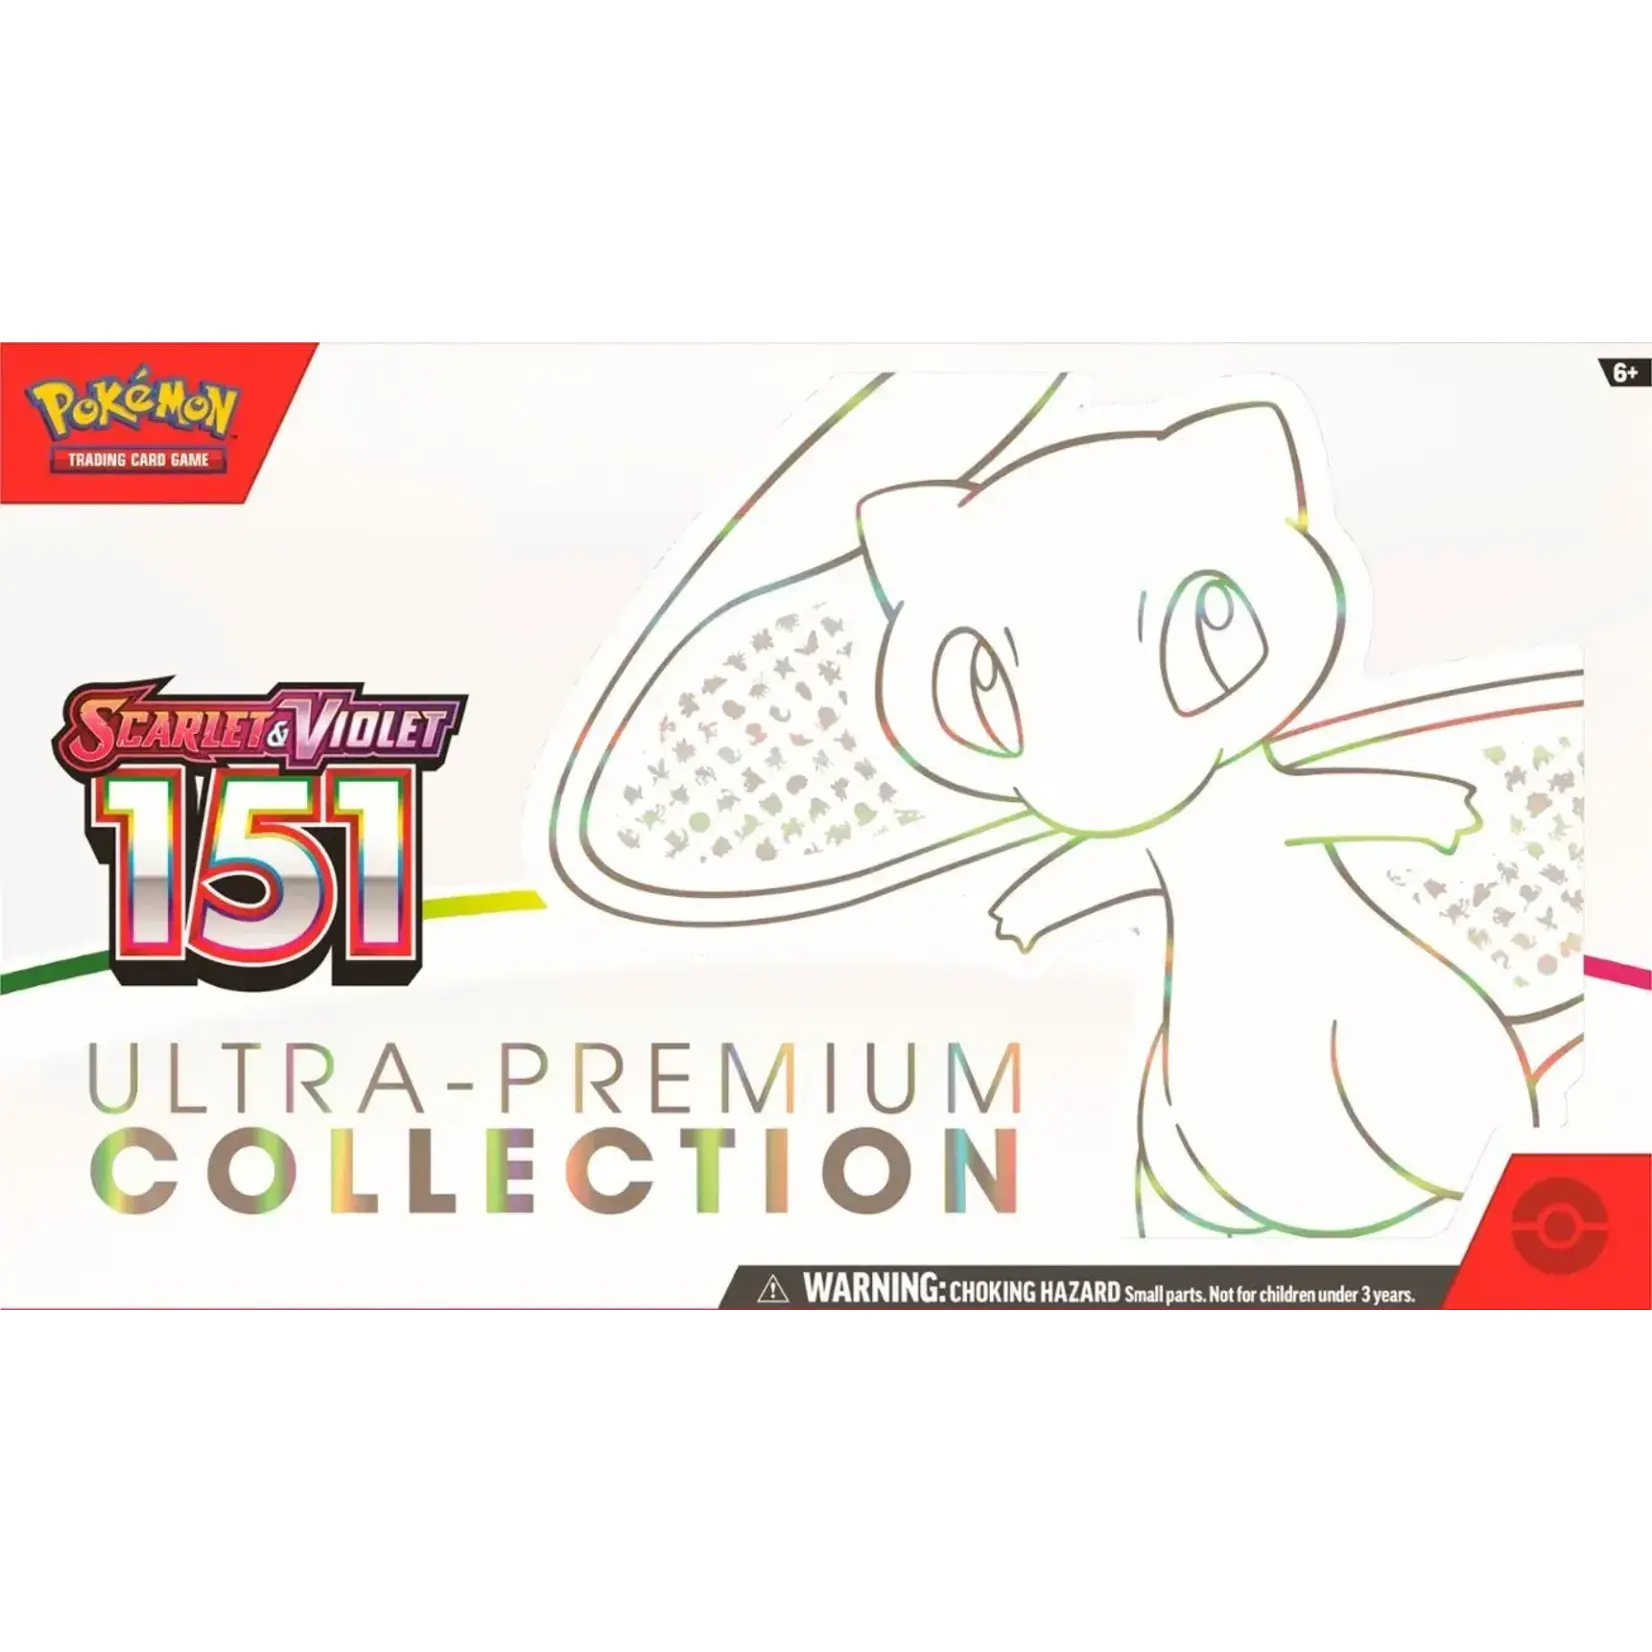 Pokémon Pokémon TCG: Scarlet & Violet-151 Ultra Premium Collection